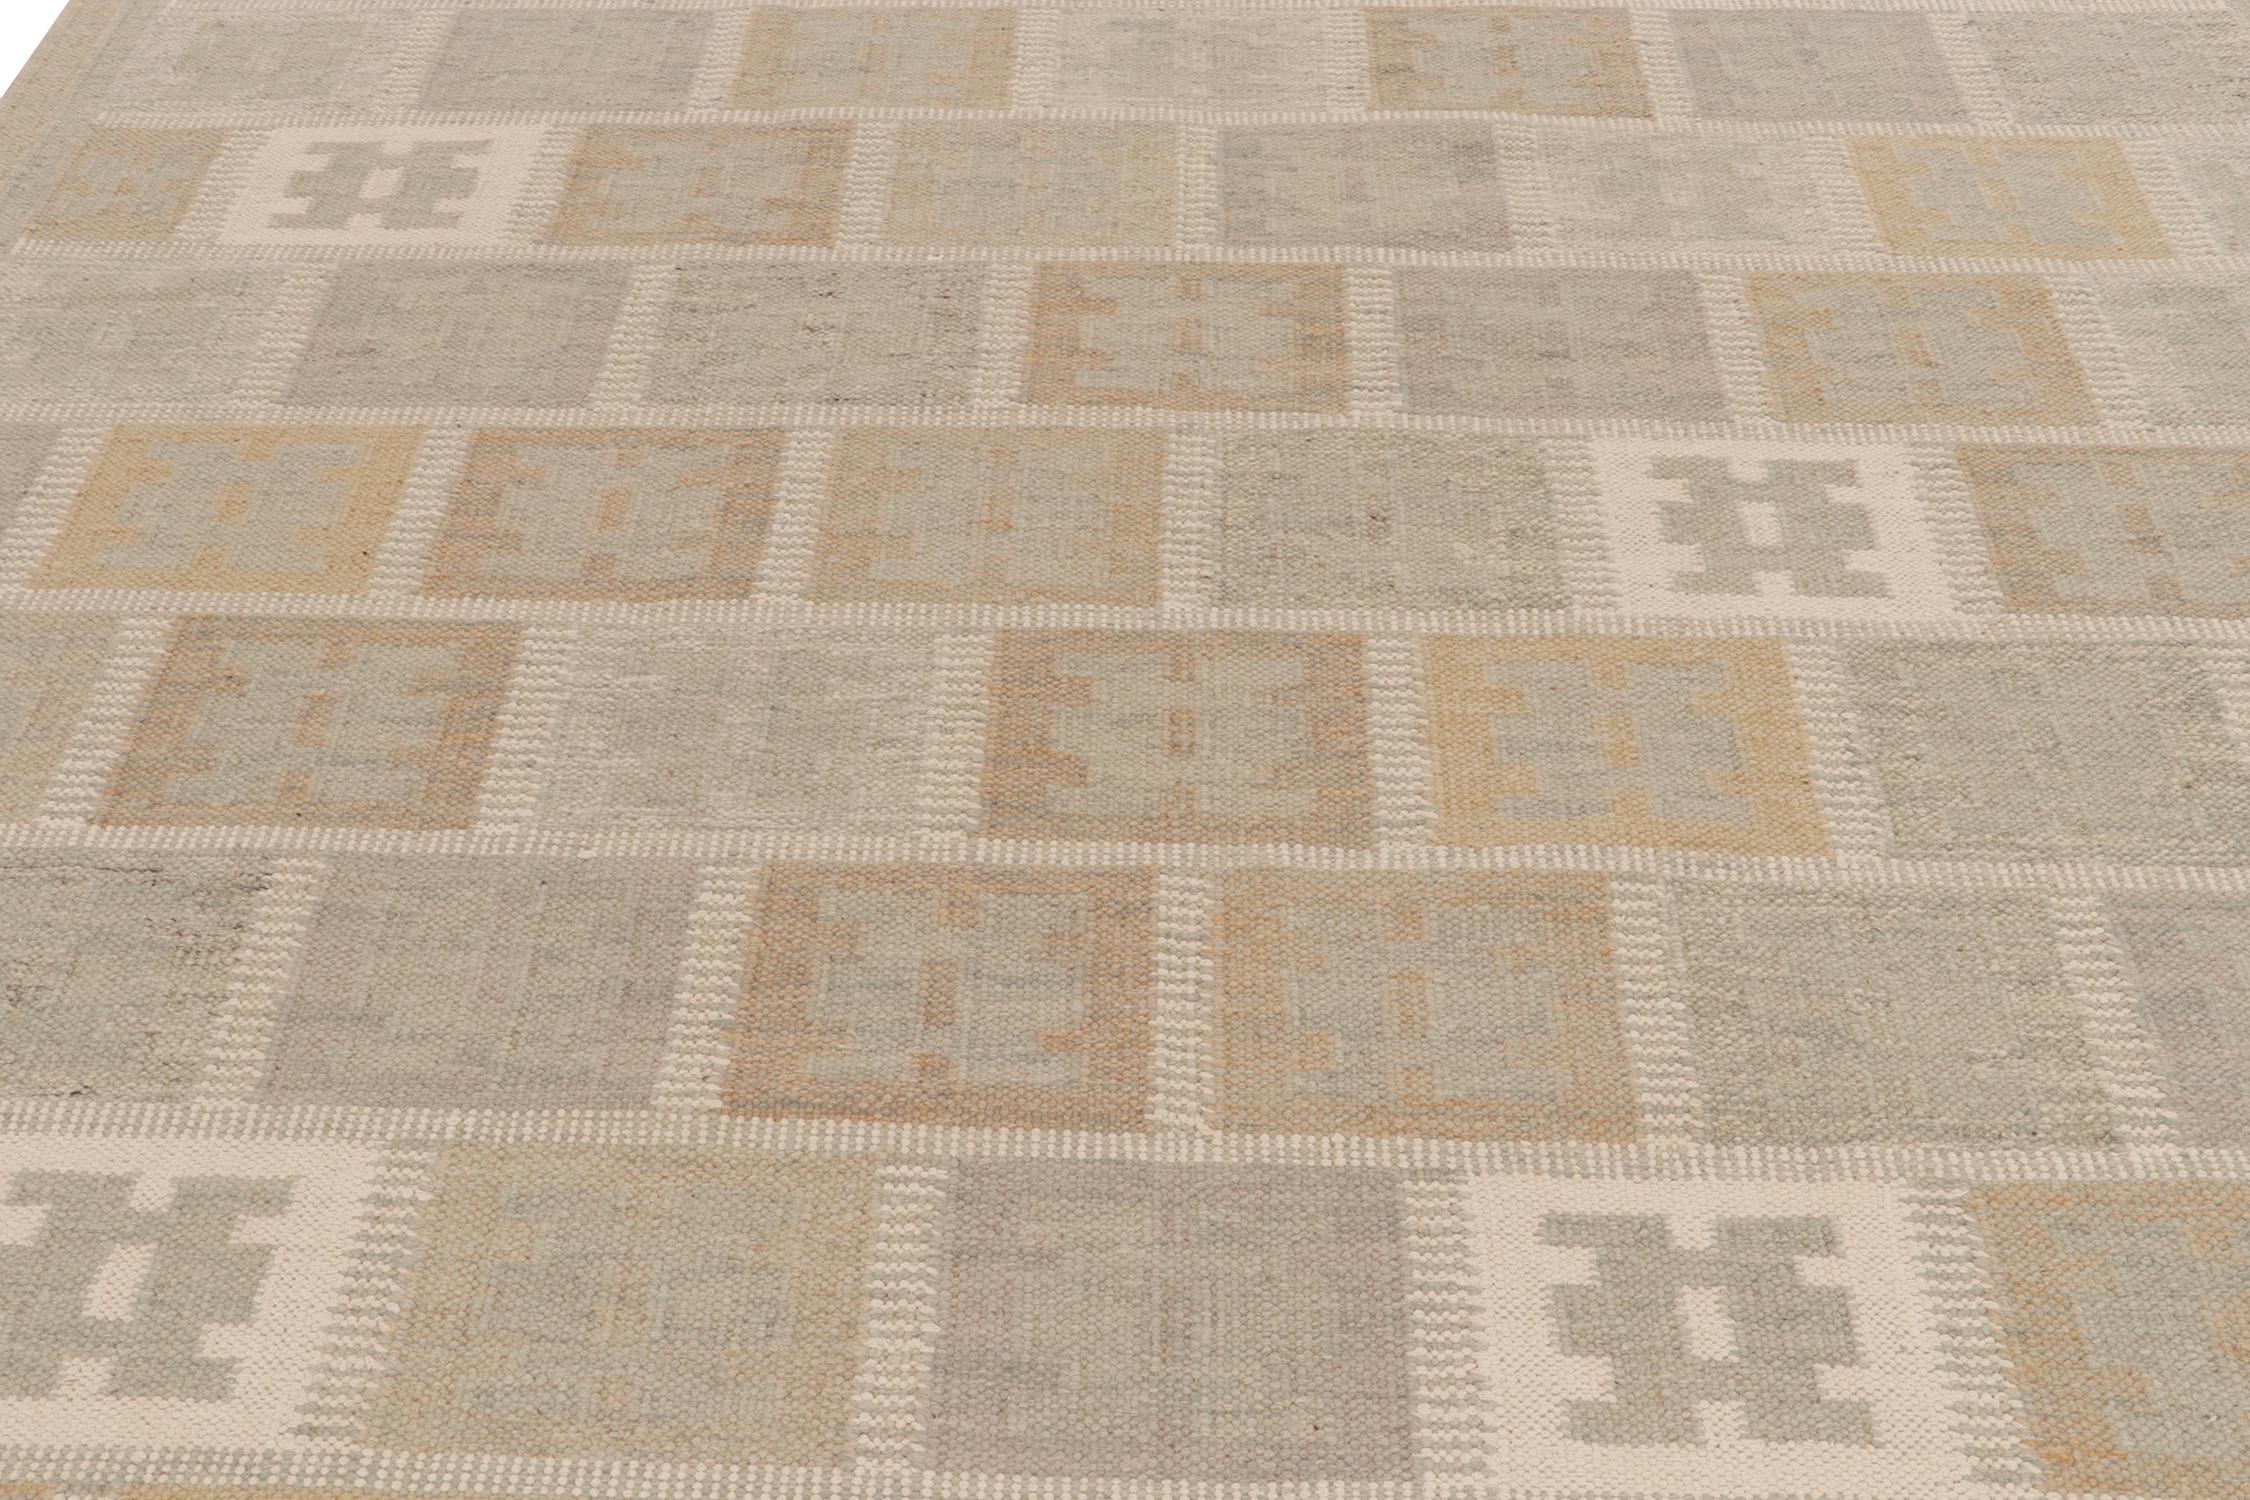 Indian Rug & Kilim's Scandinavian Style Kilim in Gray, Beige-Brown Geometric Pattern For Sale